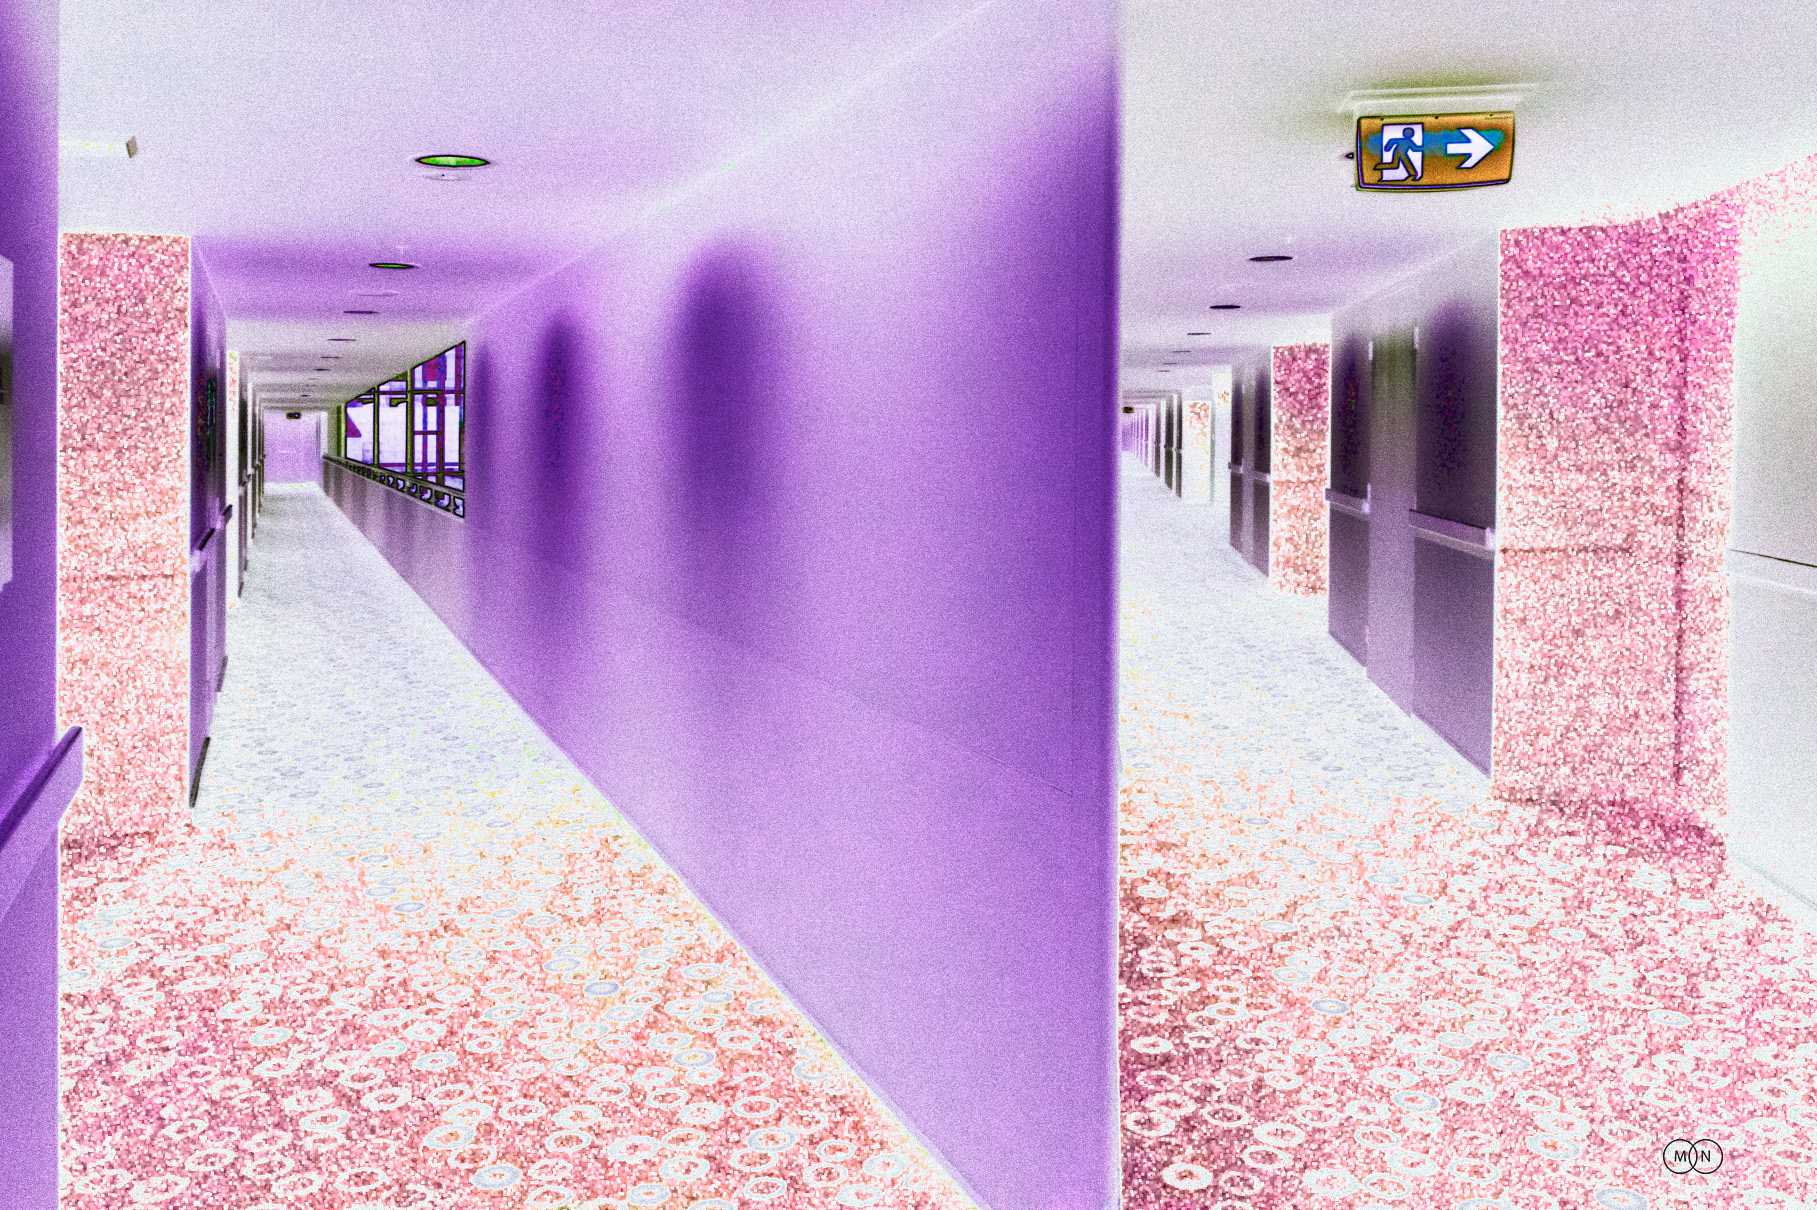 Corridors - I